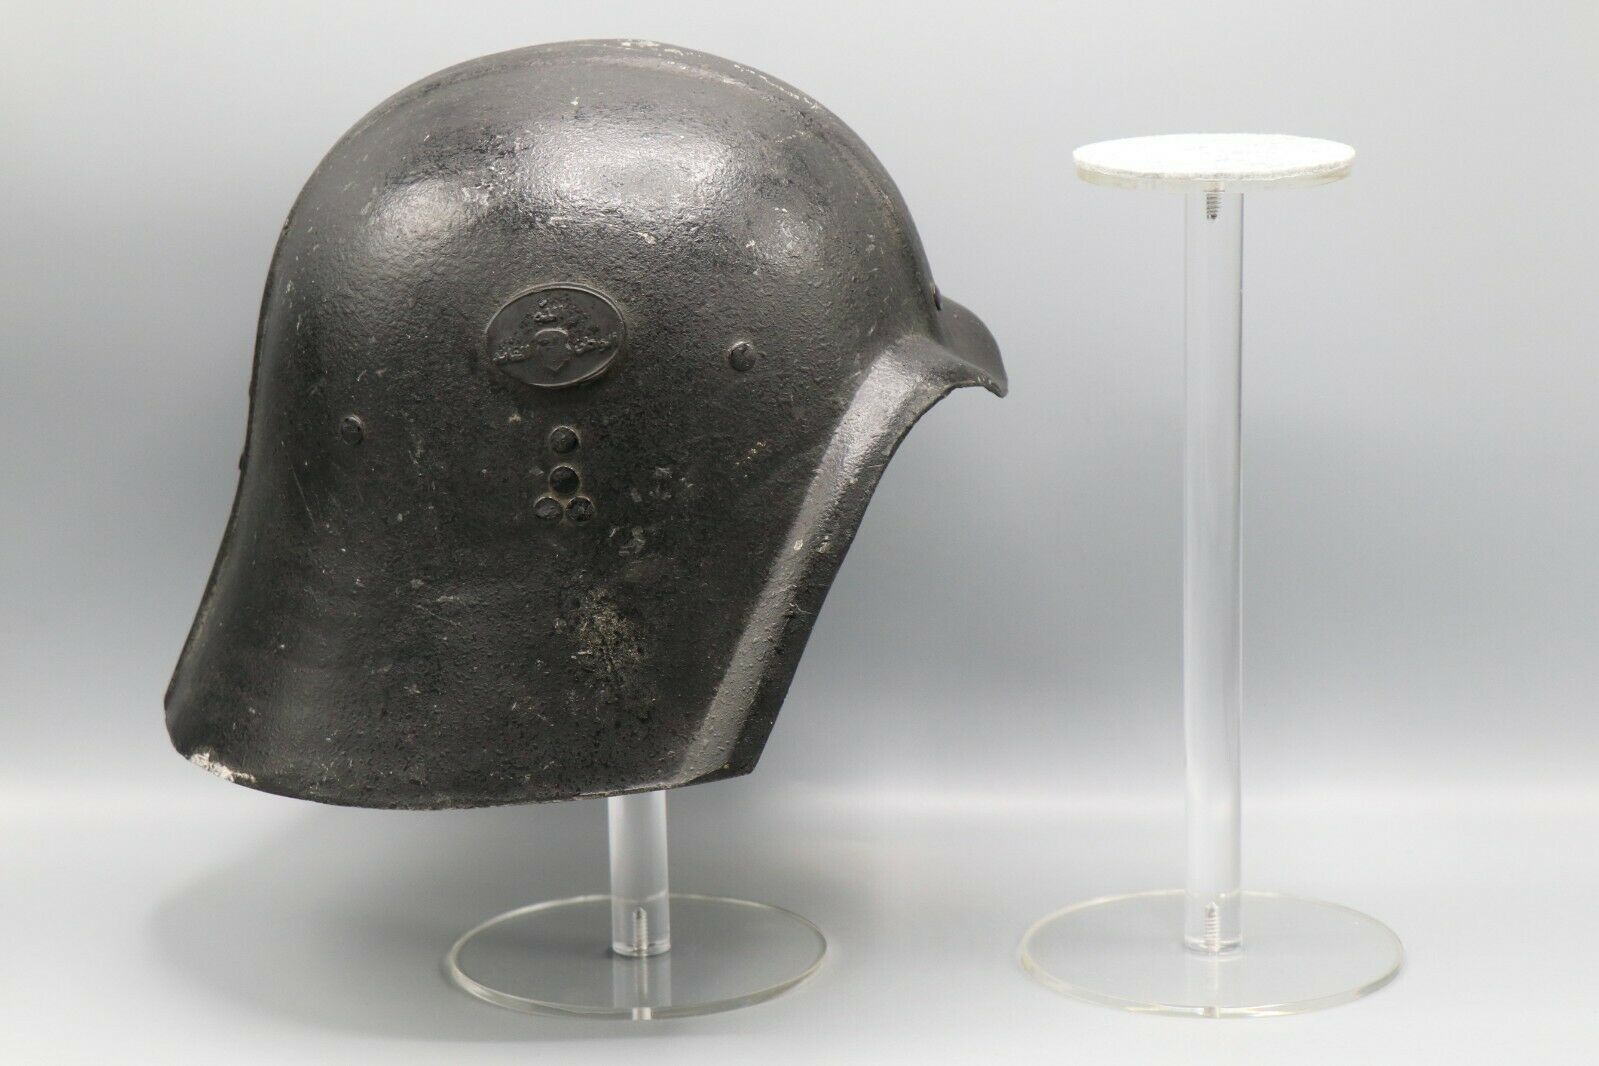 Helmet Headgear Hat Display Stand Holder ~ Used with NFL, MLB, Star Wars Masks